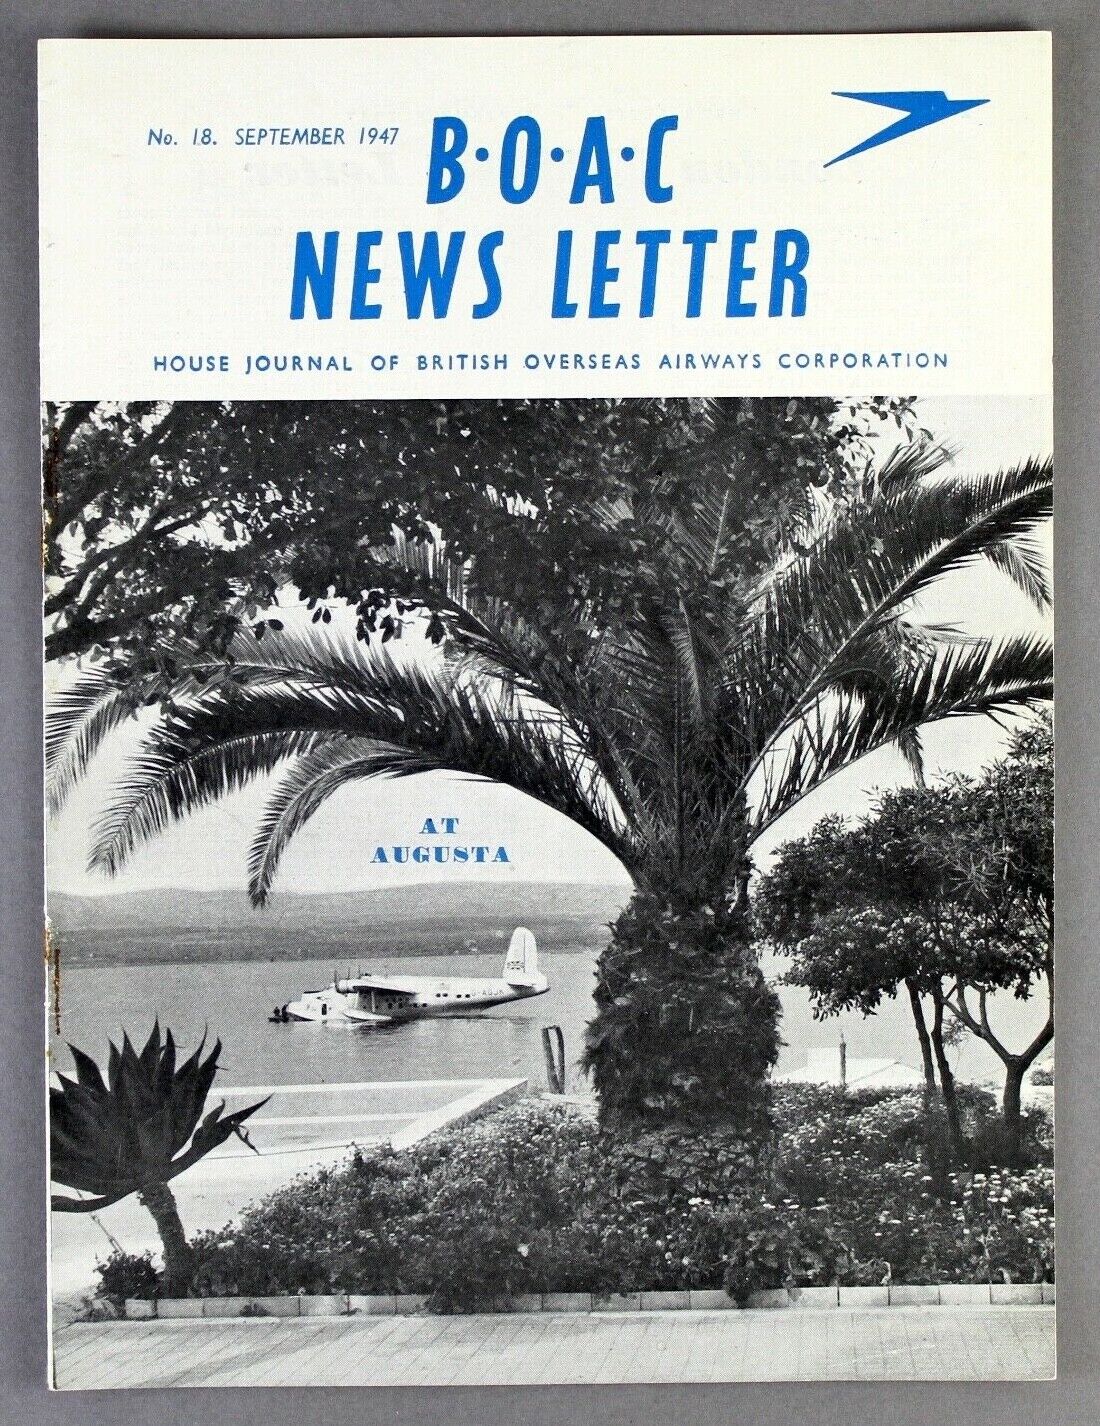 BOAC NEWS LETTER STAFF MAGAZINE SEPTEMBER 1947 B.O.A.C. FLYING BOATS 